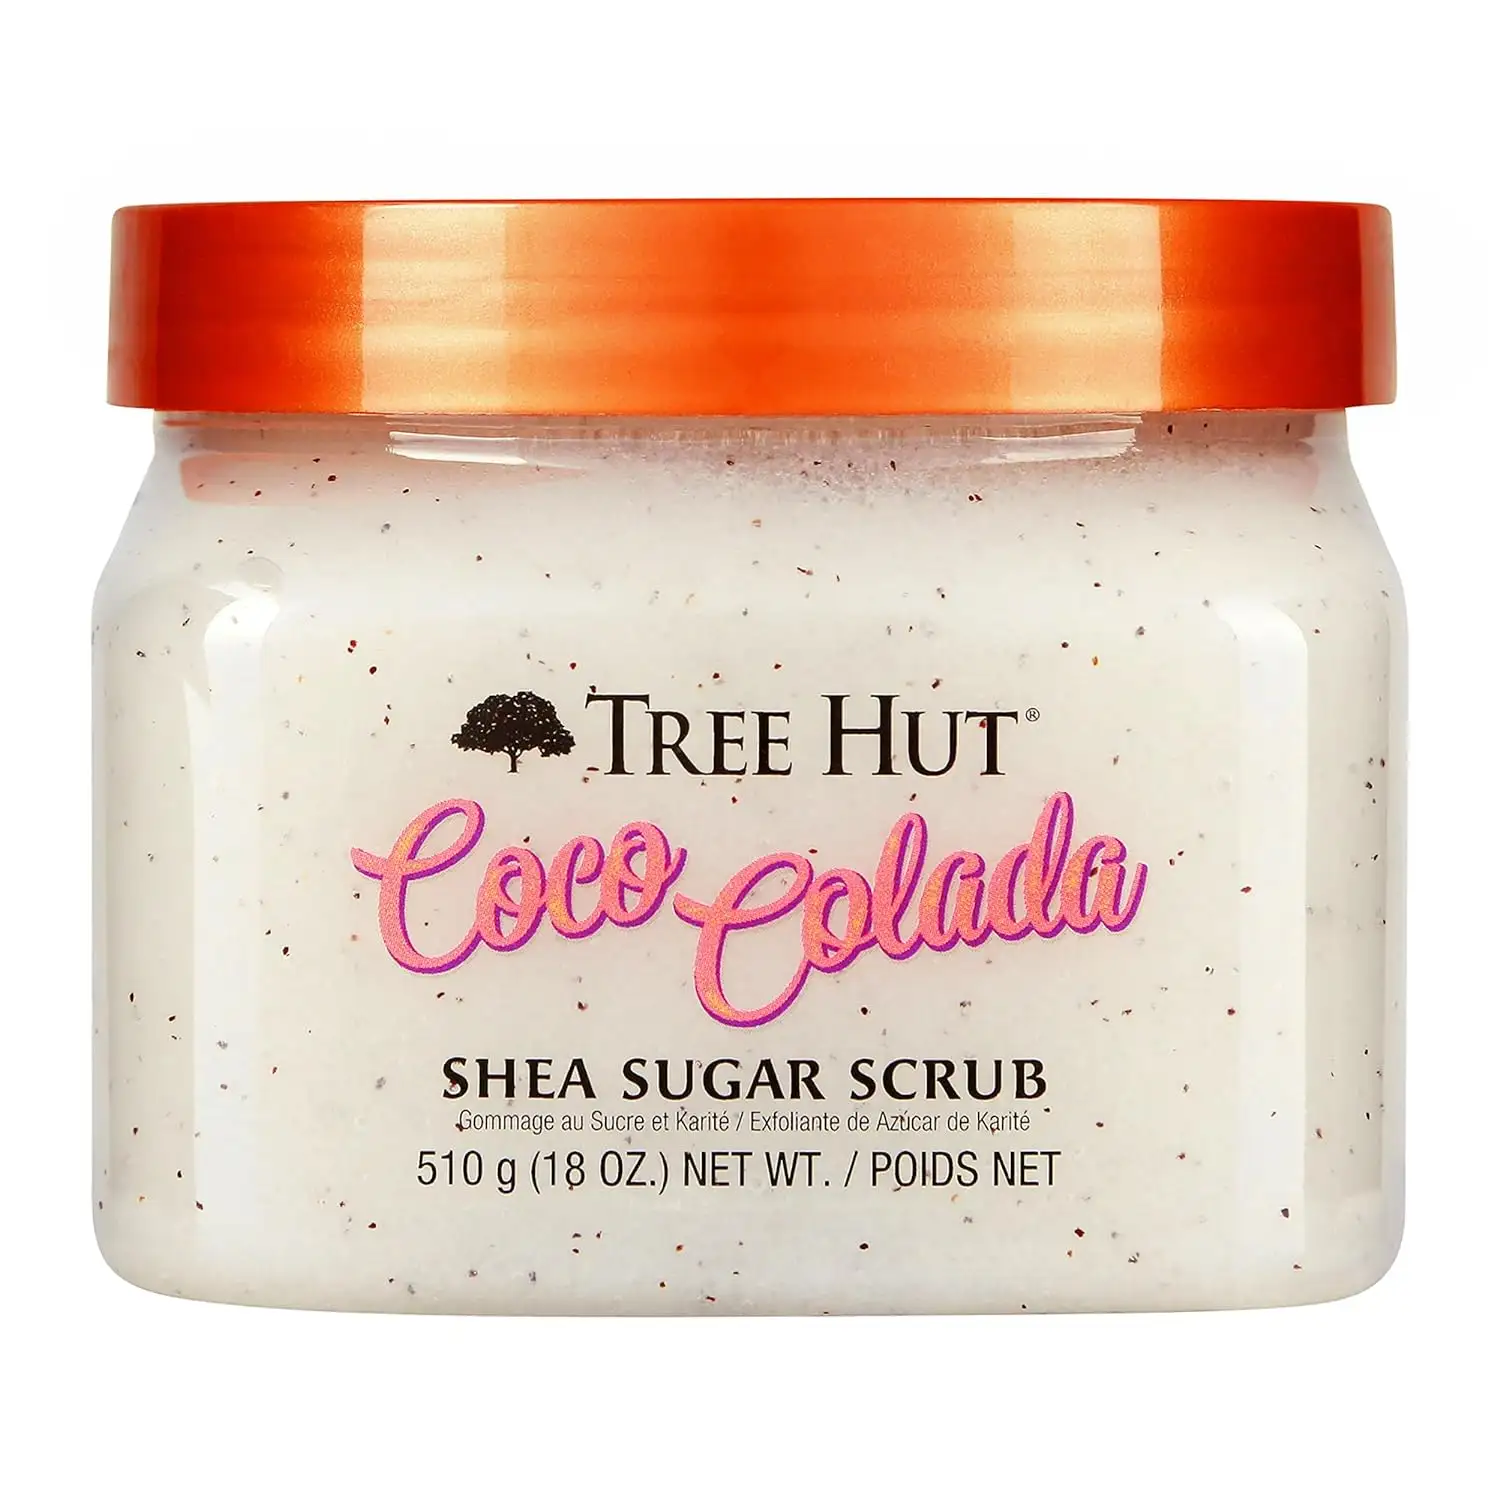 Harga diskon pohon Hut Shea Sugar Scrub Coco Colada, 18 oz, Ultra Hydrating dan Scrub pengelupas untuk nutrisi esensial Bo